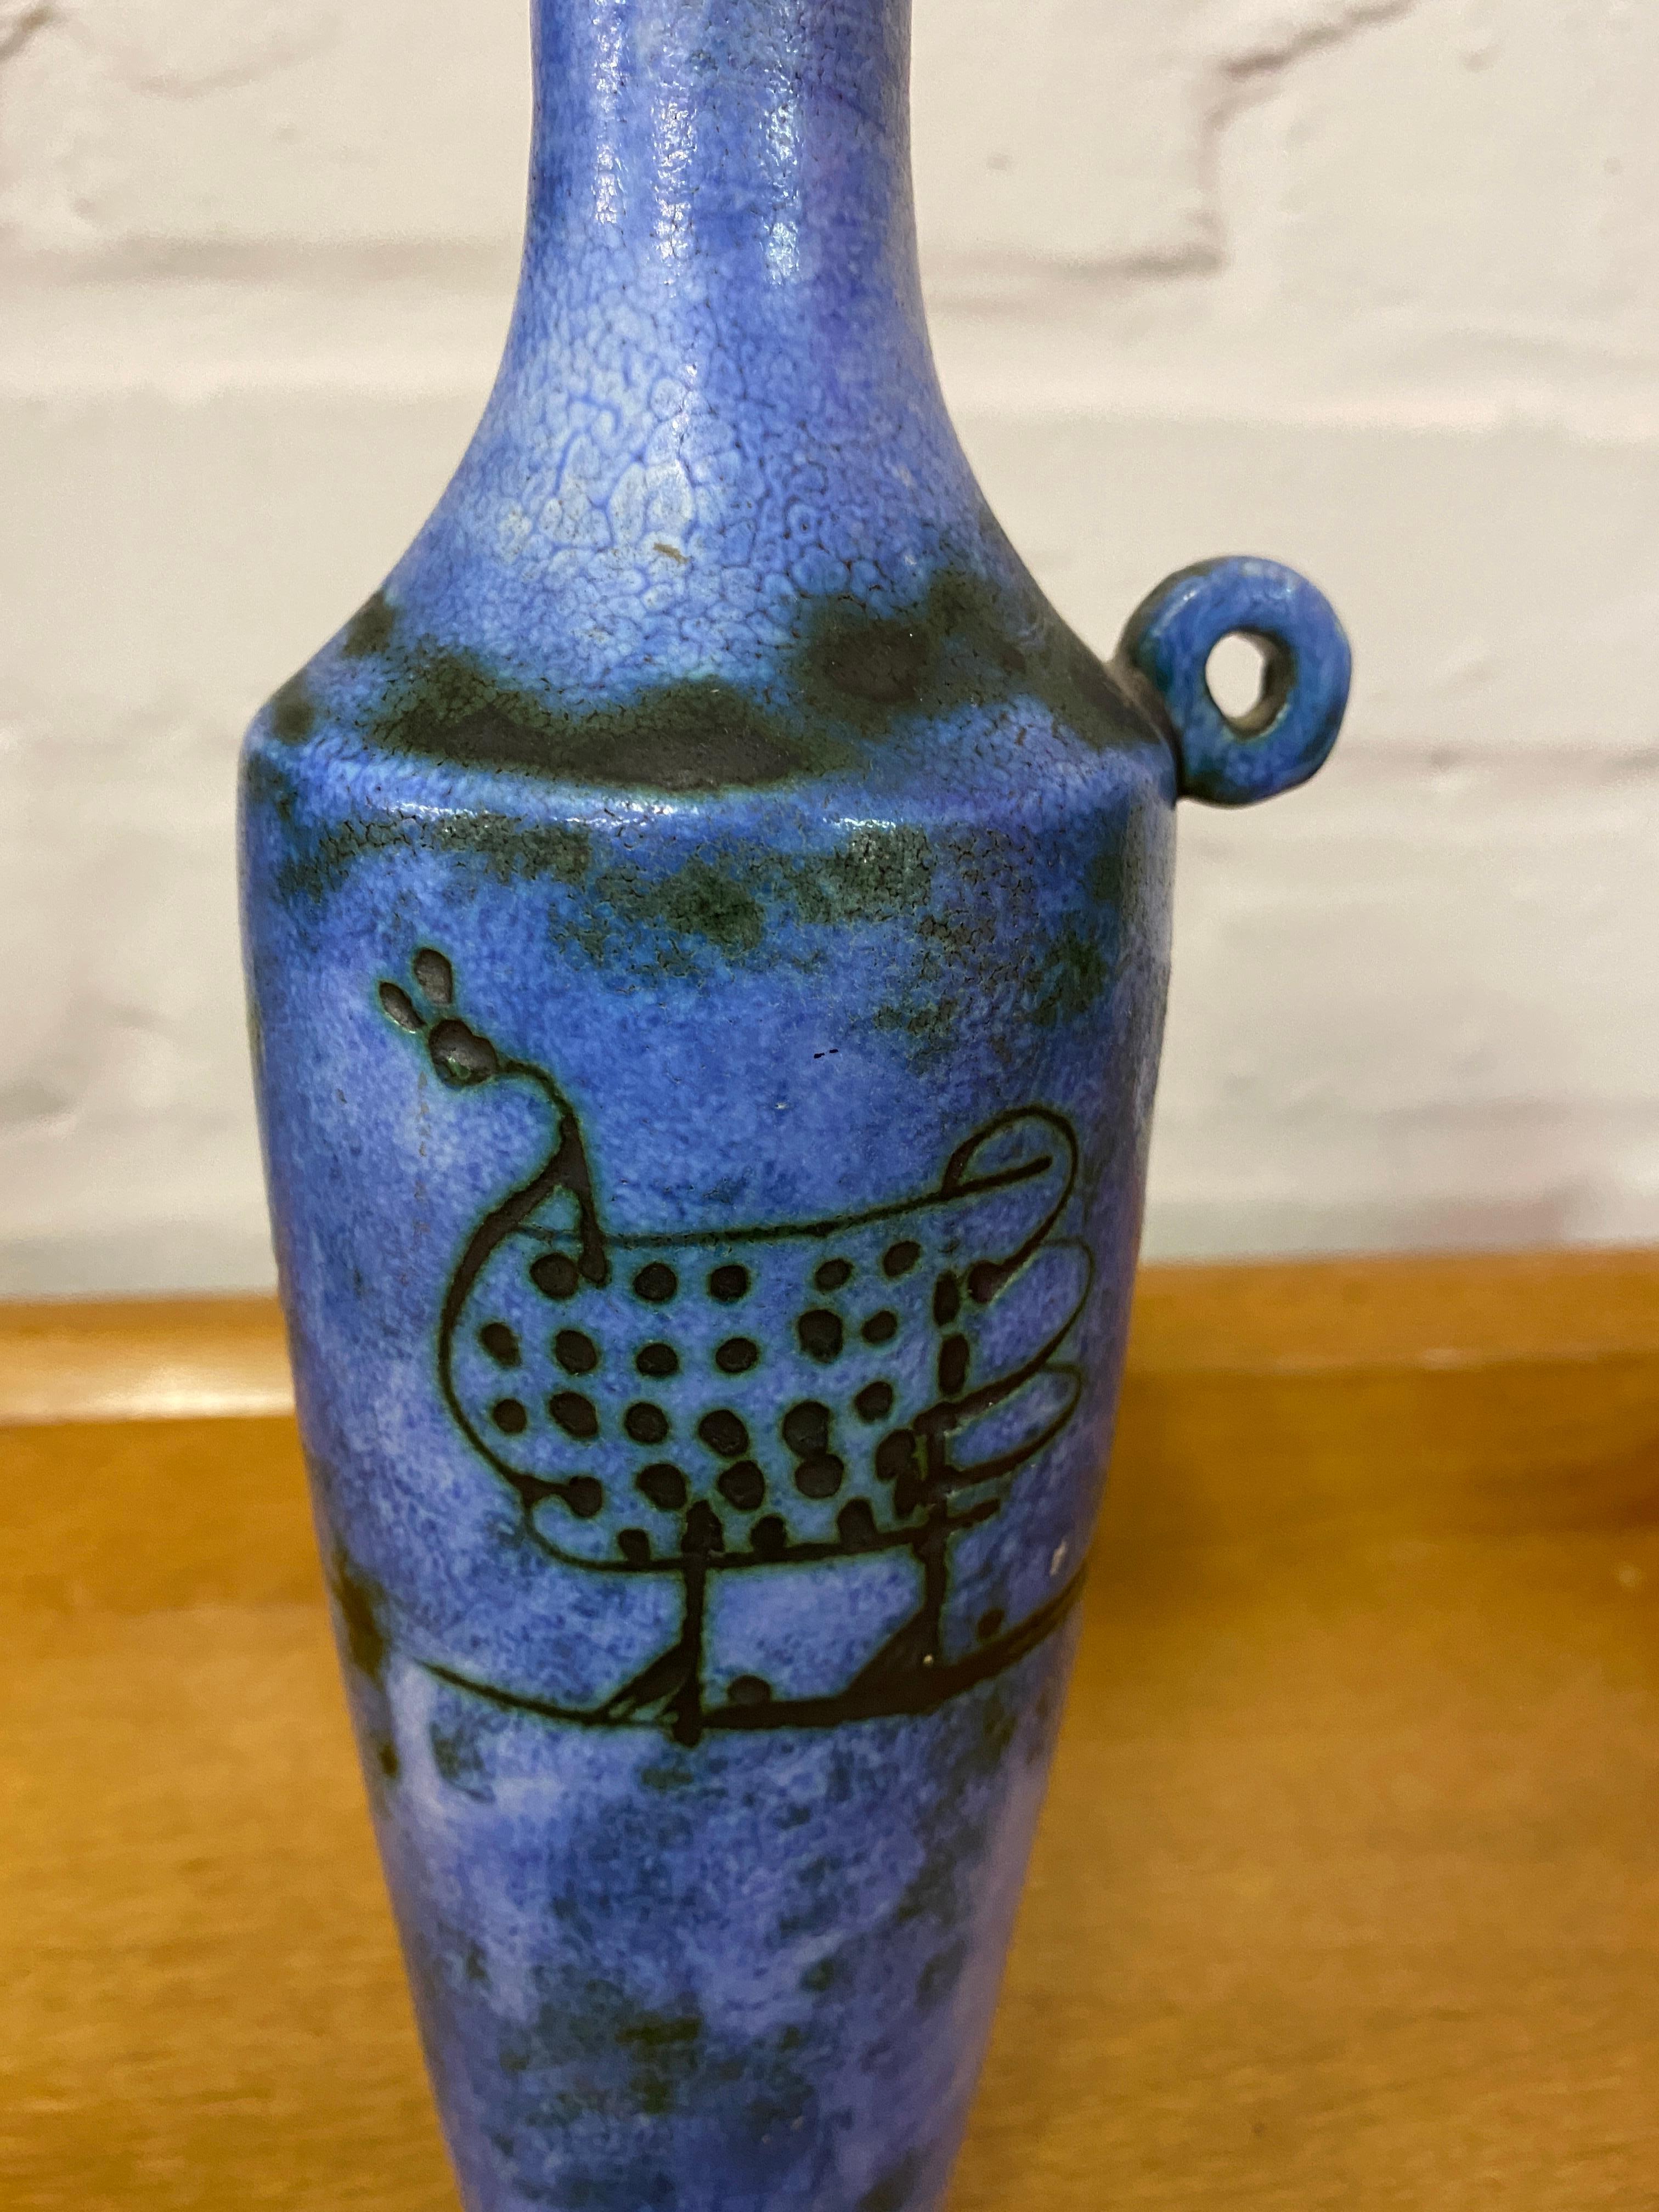 1950s ceramic vase by Jacques Blin.